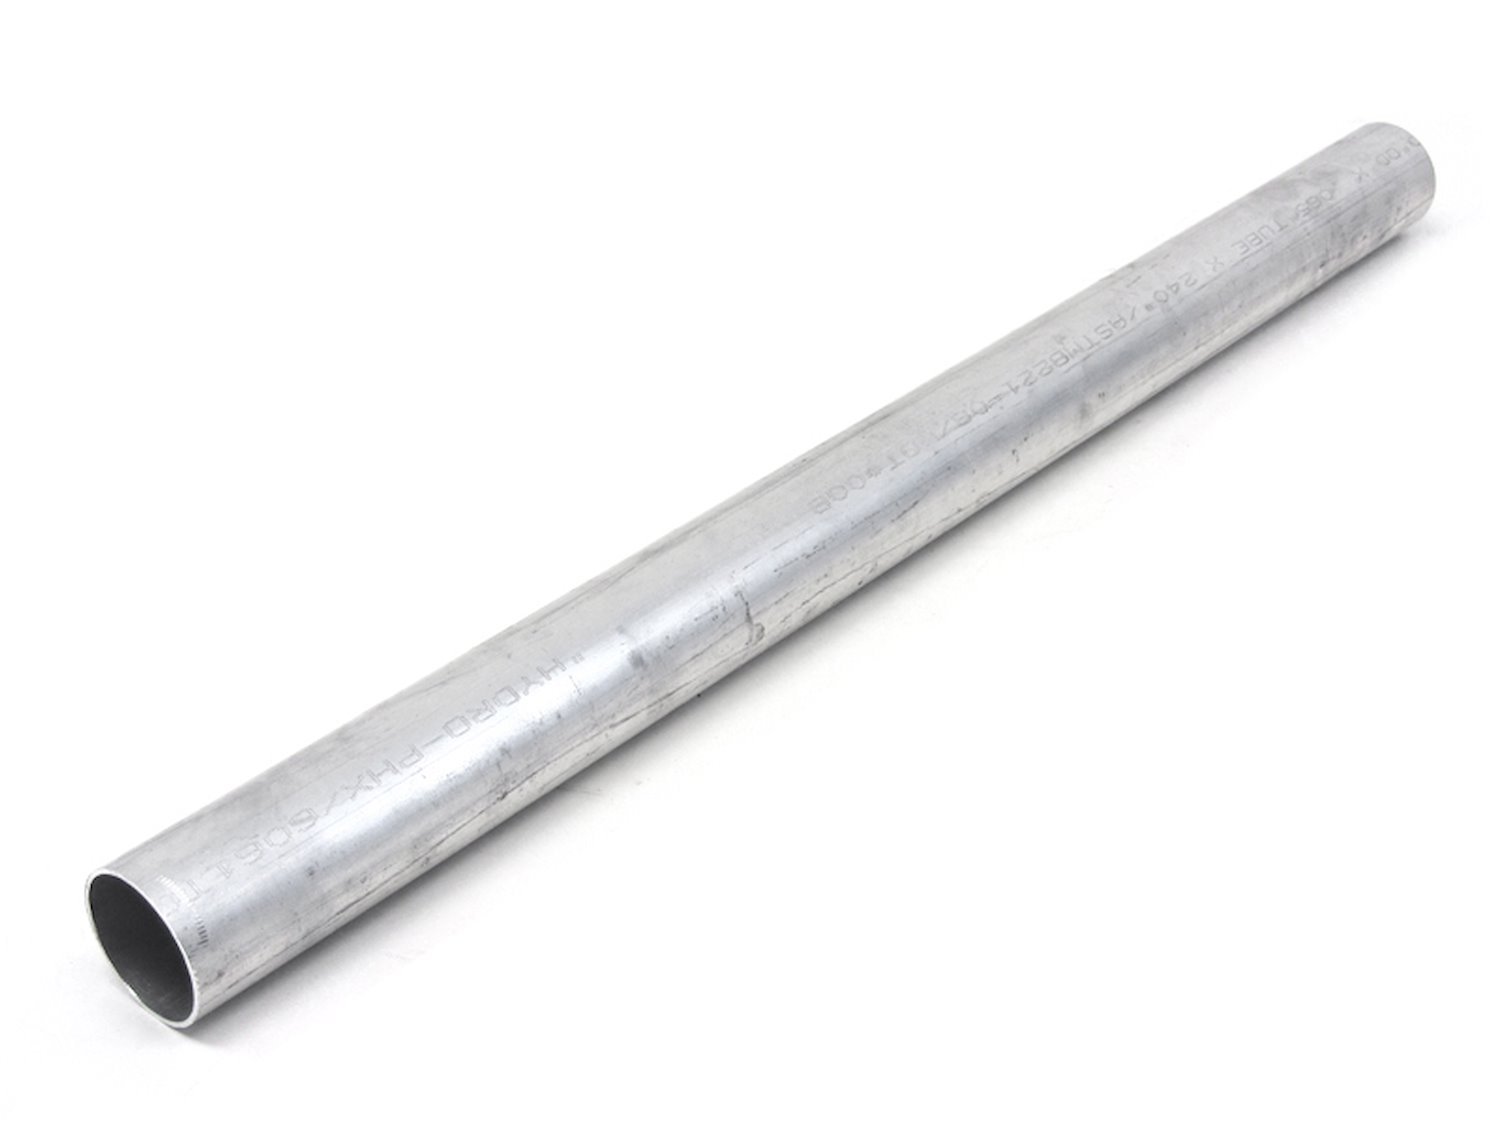 AST-3F-125 Aluminum Tubing, 6061 Aluminum, Straight Tubing, 1-1/4 in. OD, Seamless, Raw Finish, 3 ft. Long